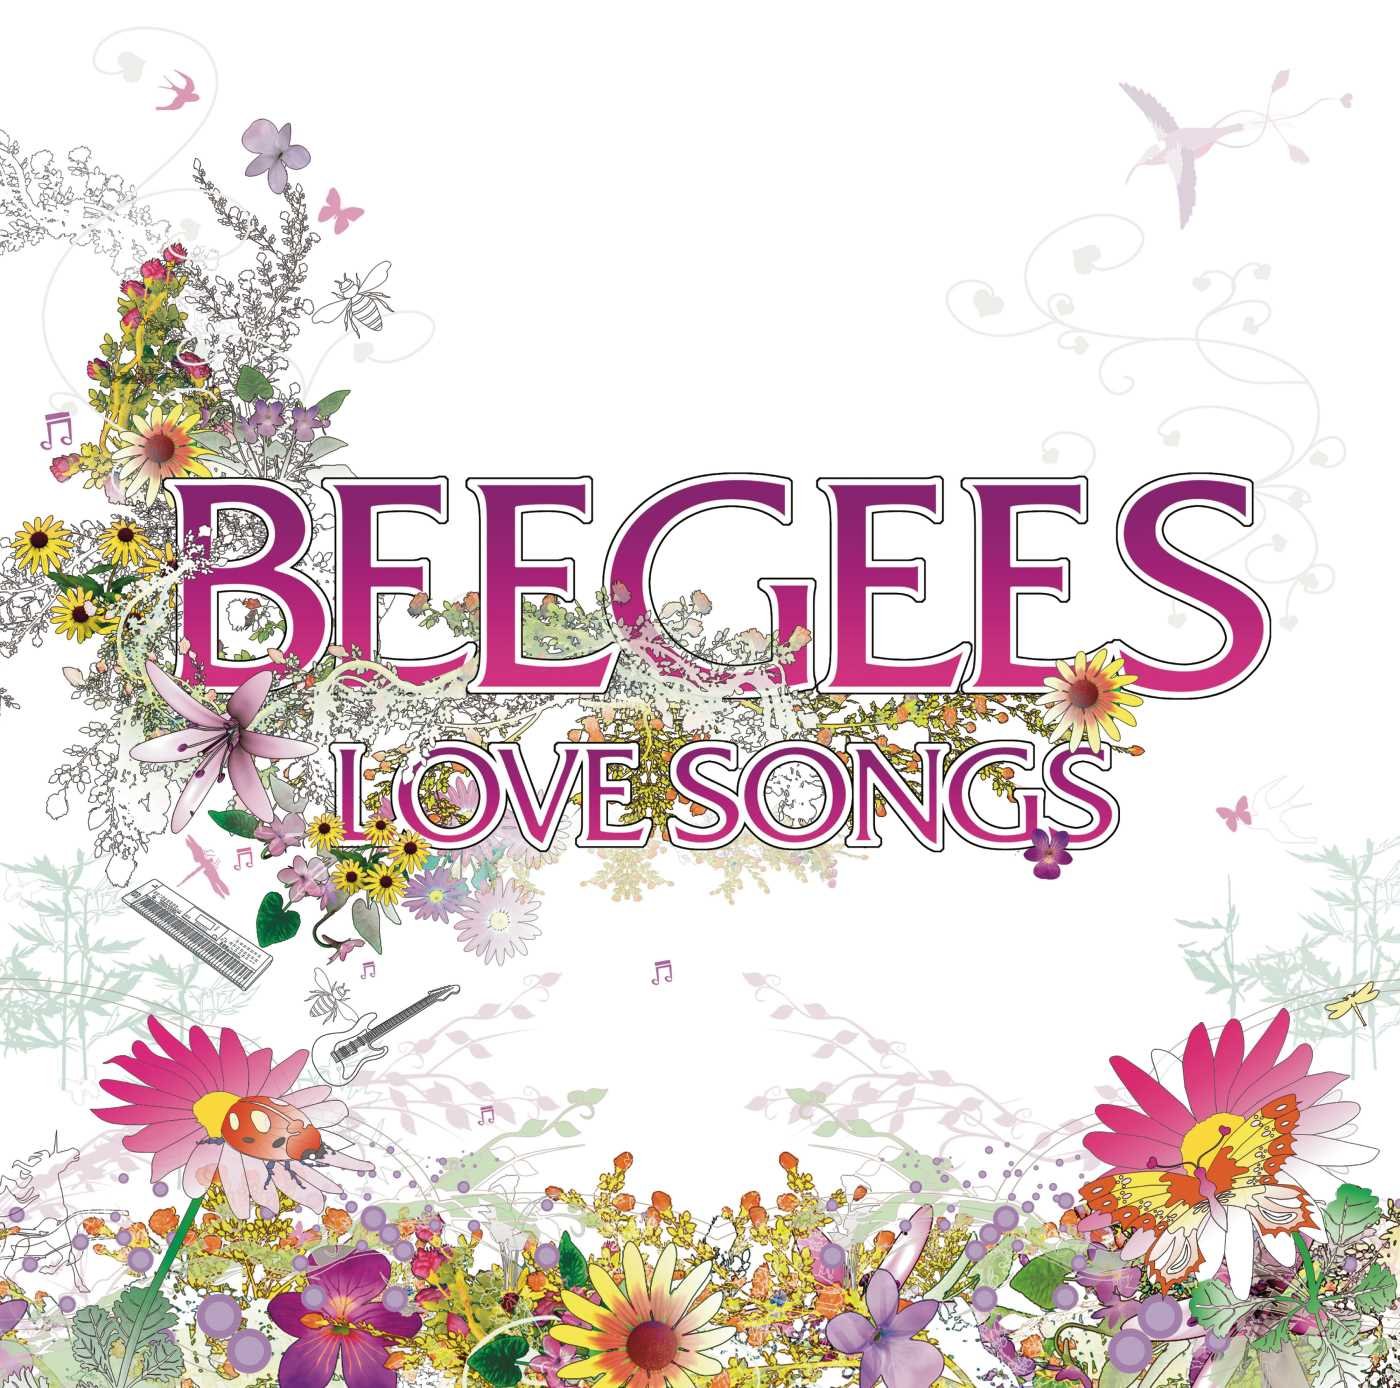 The Bee Gees Love Songs